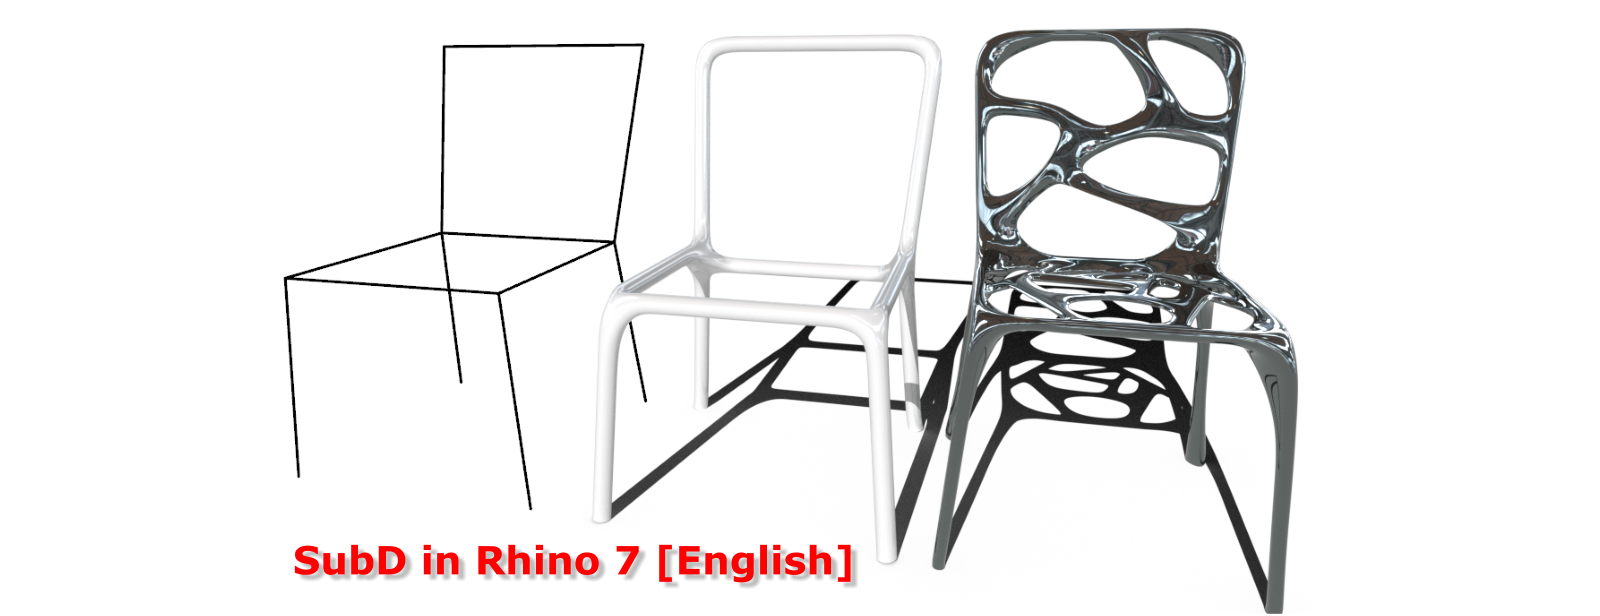 SubD for Rhino 7